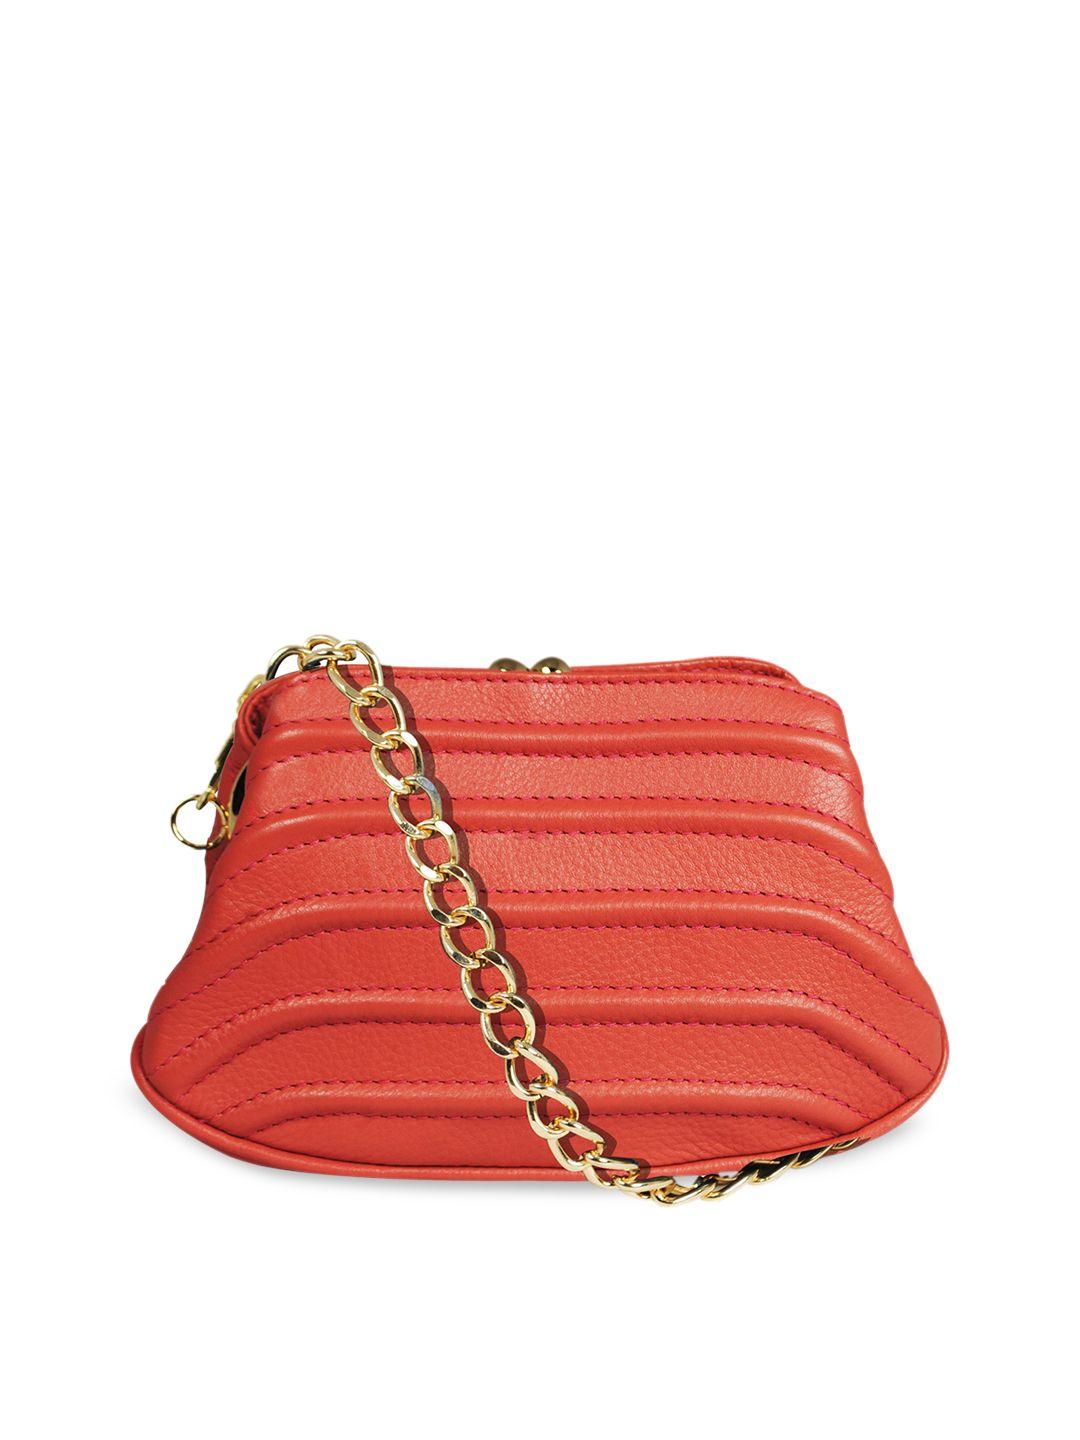 calfnero orange textured purse clutch